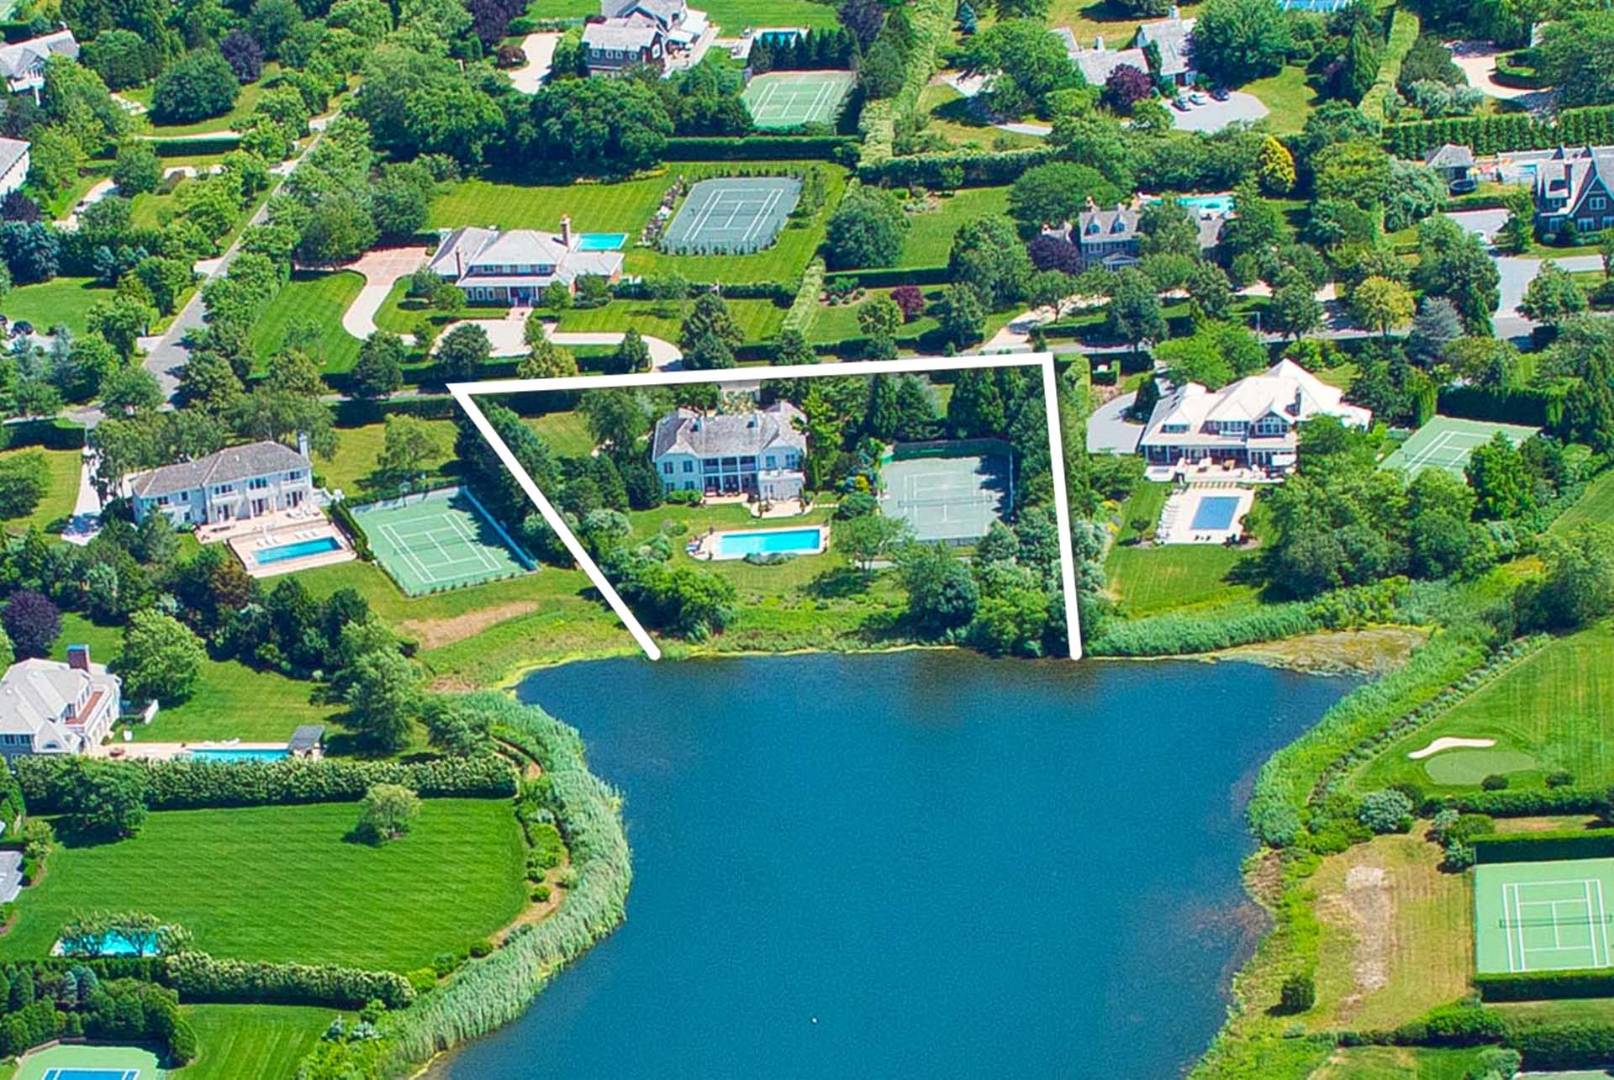 Rental Property at Village Of Southampton, Village Of Southampton, Hamptons, NY - Bedrooms: 6 
Bathrooms: 6  - $245,000 MO.